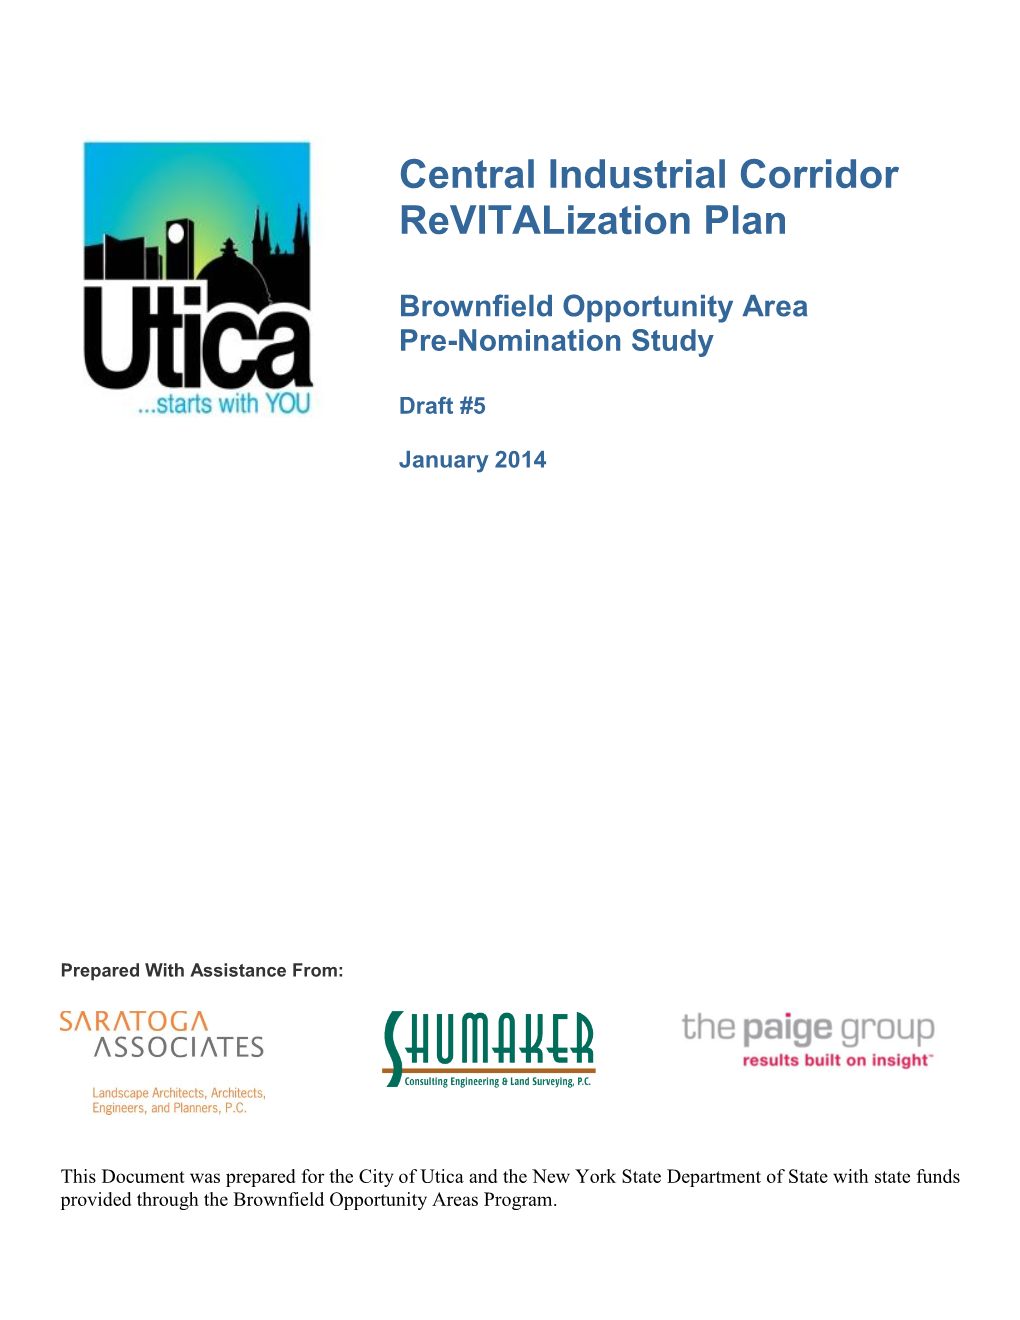 Central Industrial Corridor Revitalization Plan